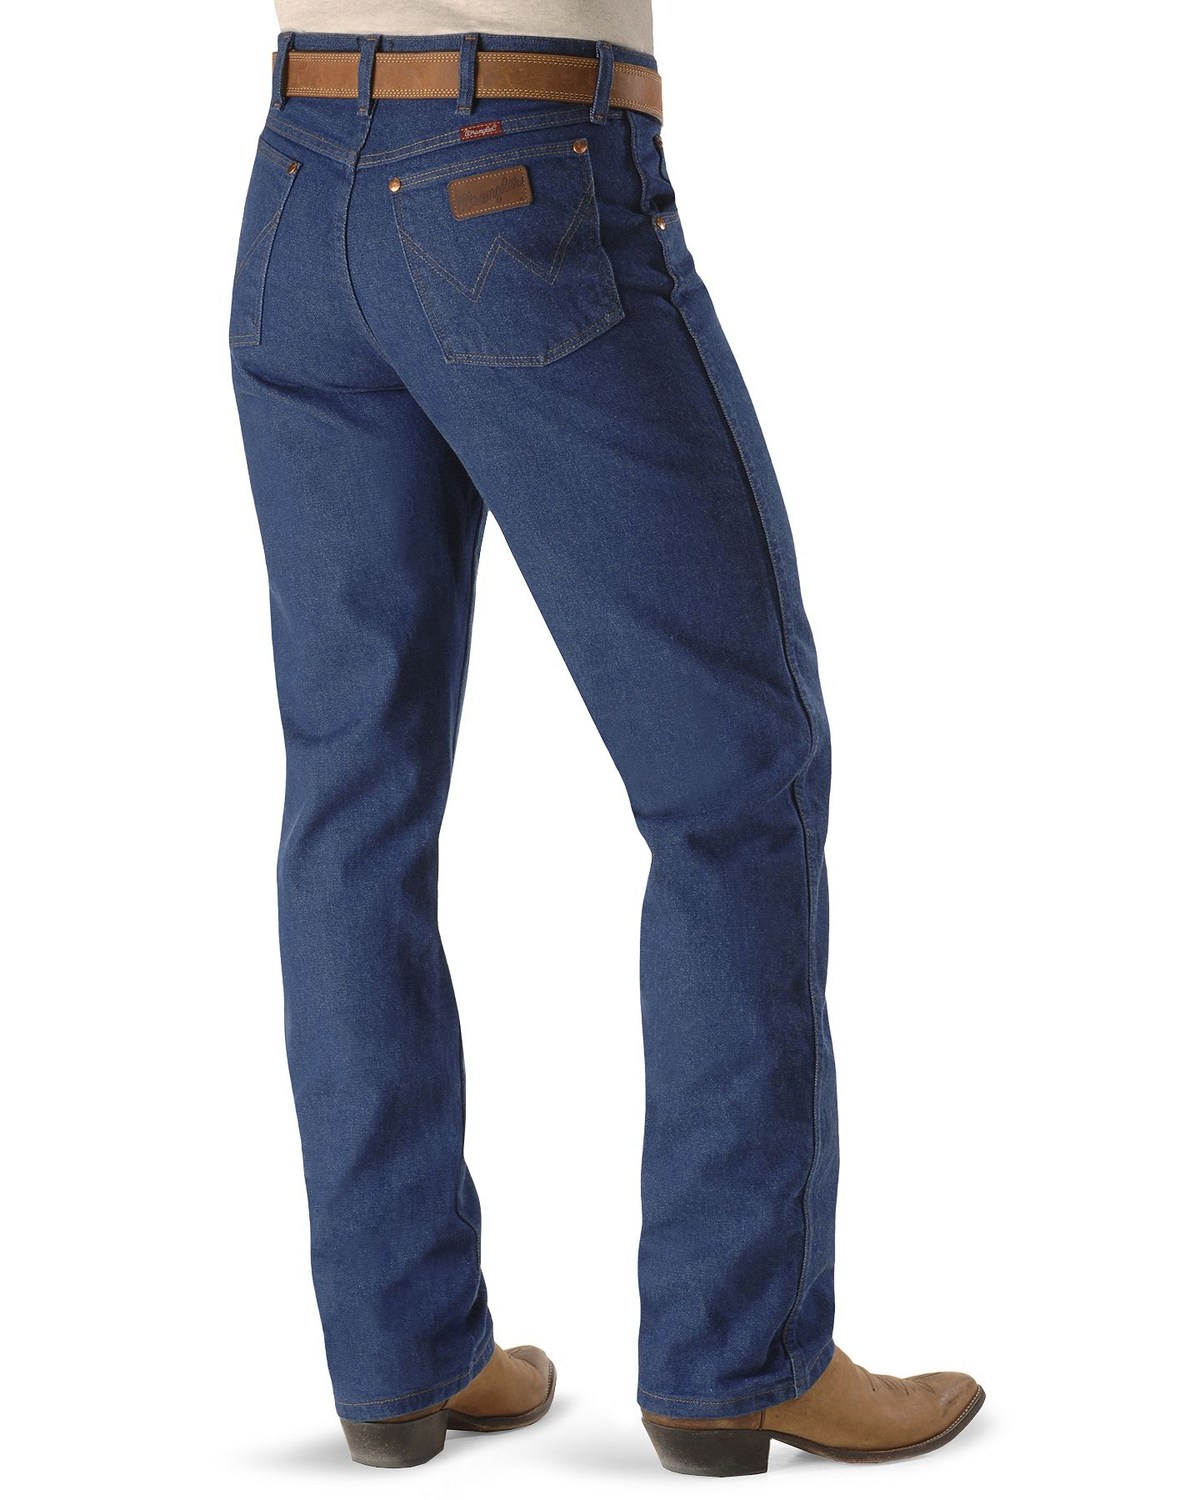 wrangler jeans 40 x 36